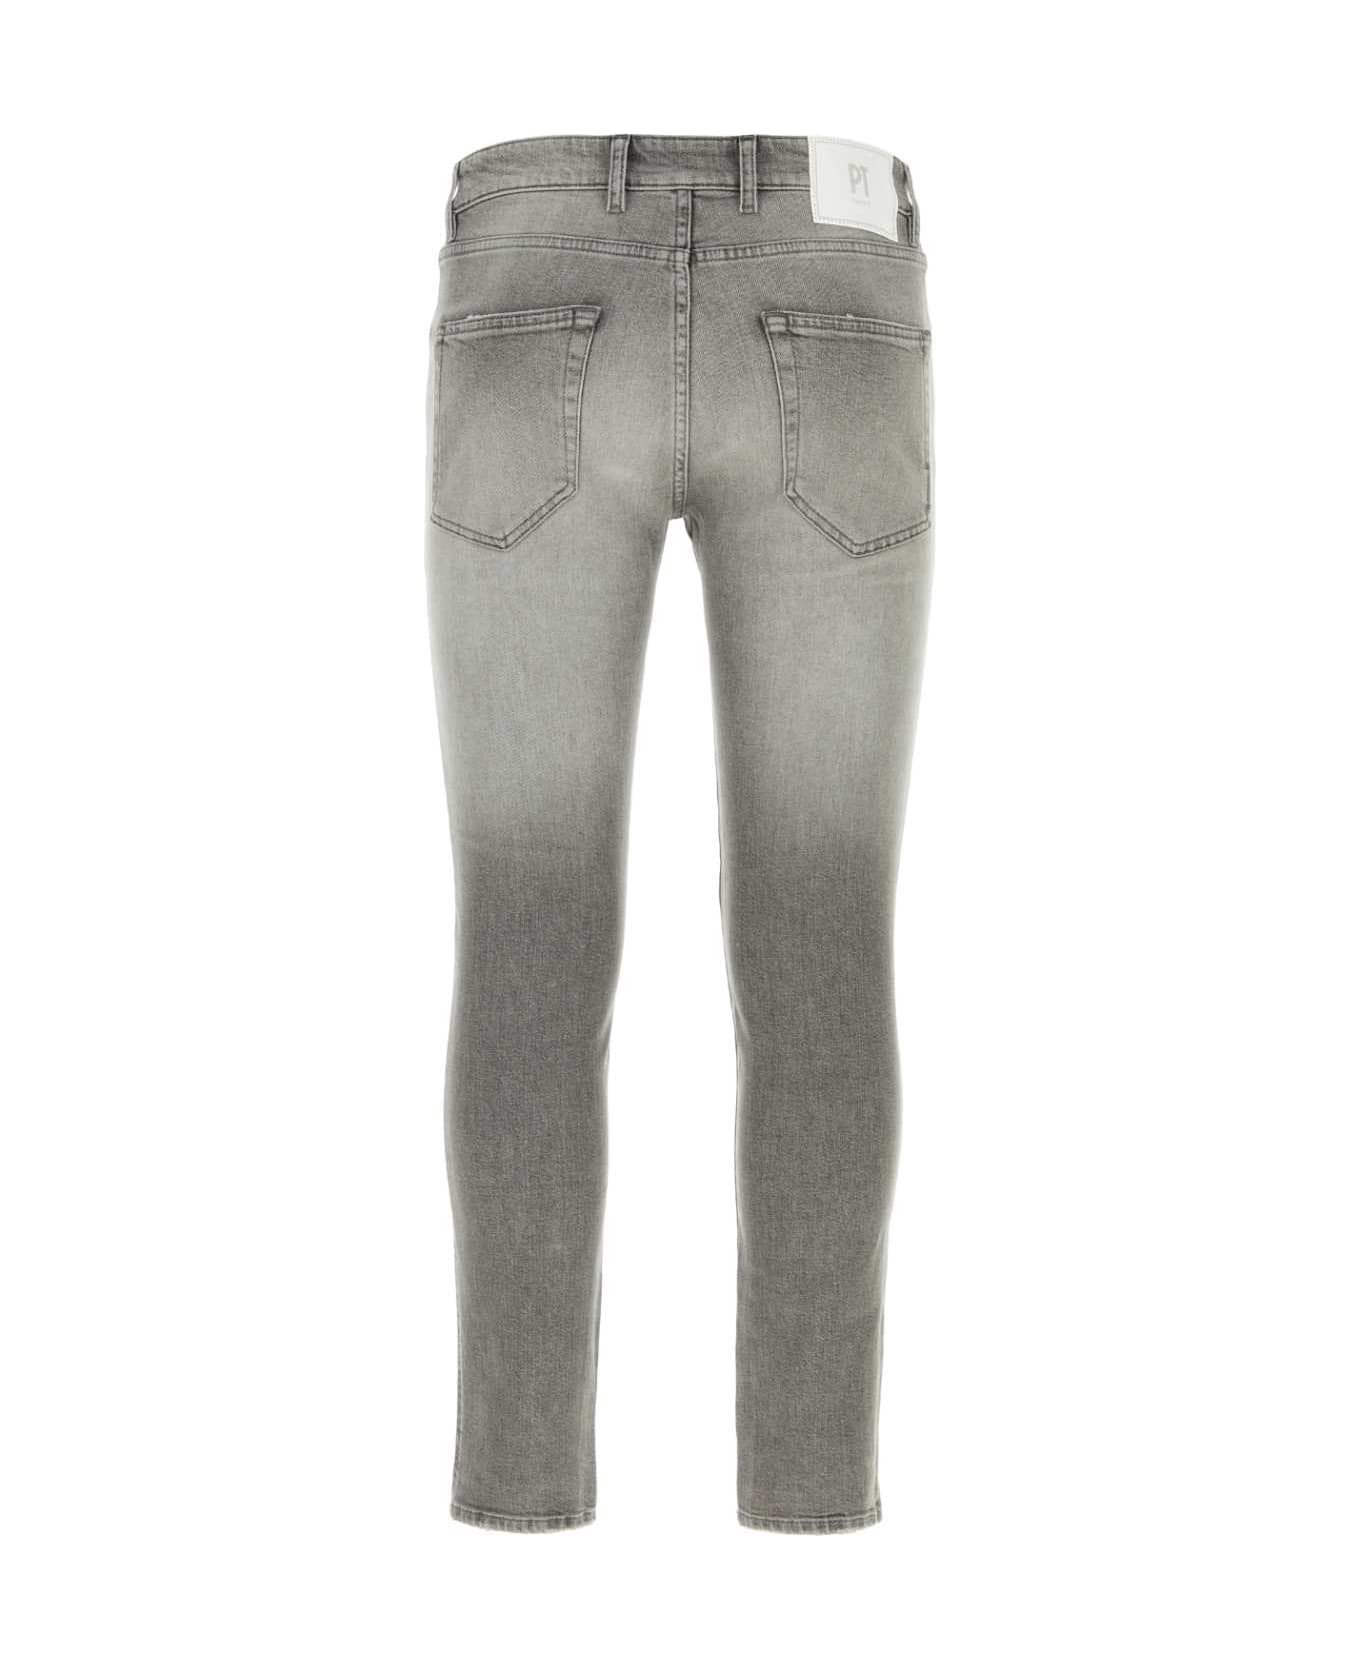 PT01 Grey Denim Jeans - GRIGIOCHIARO